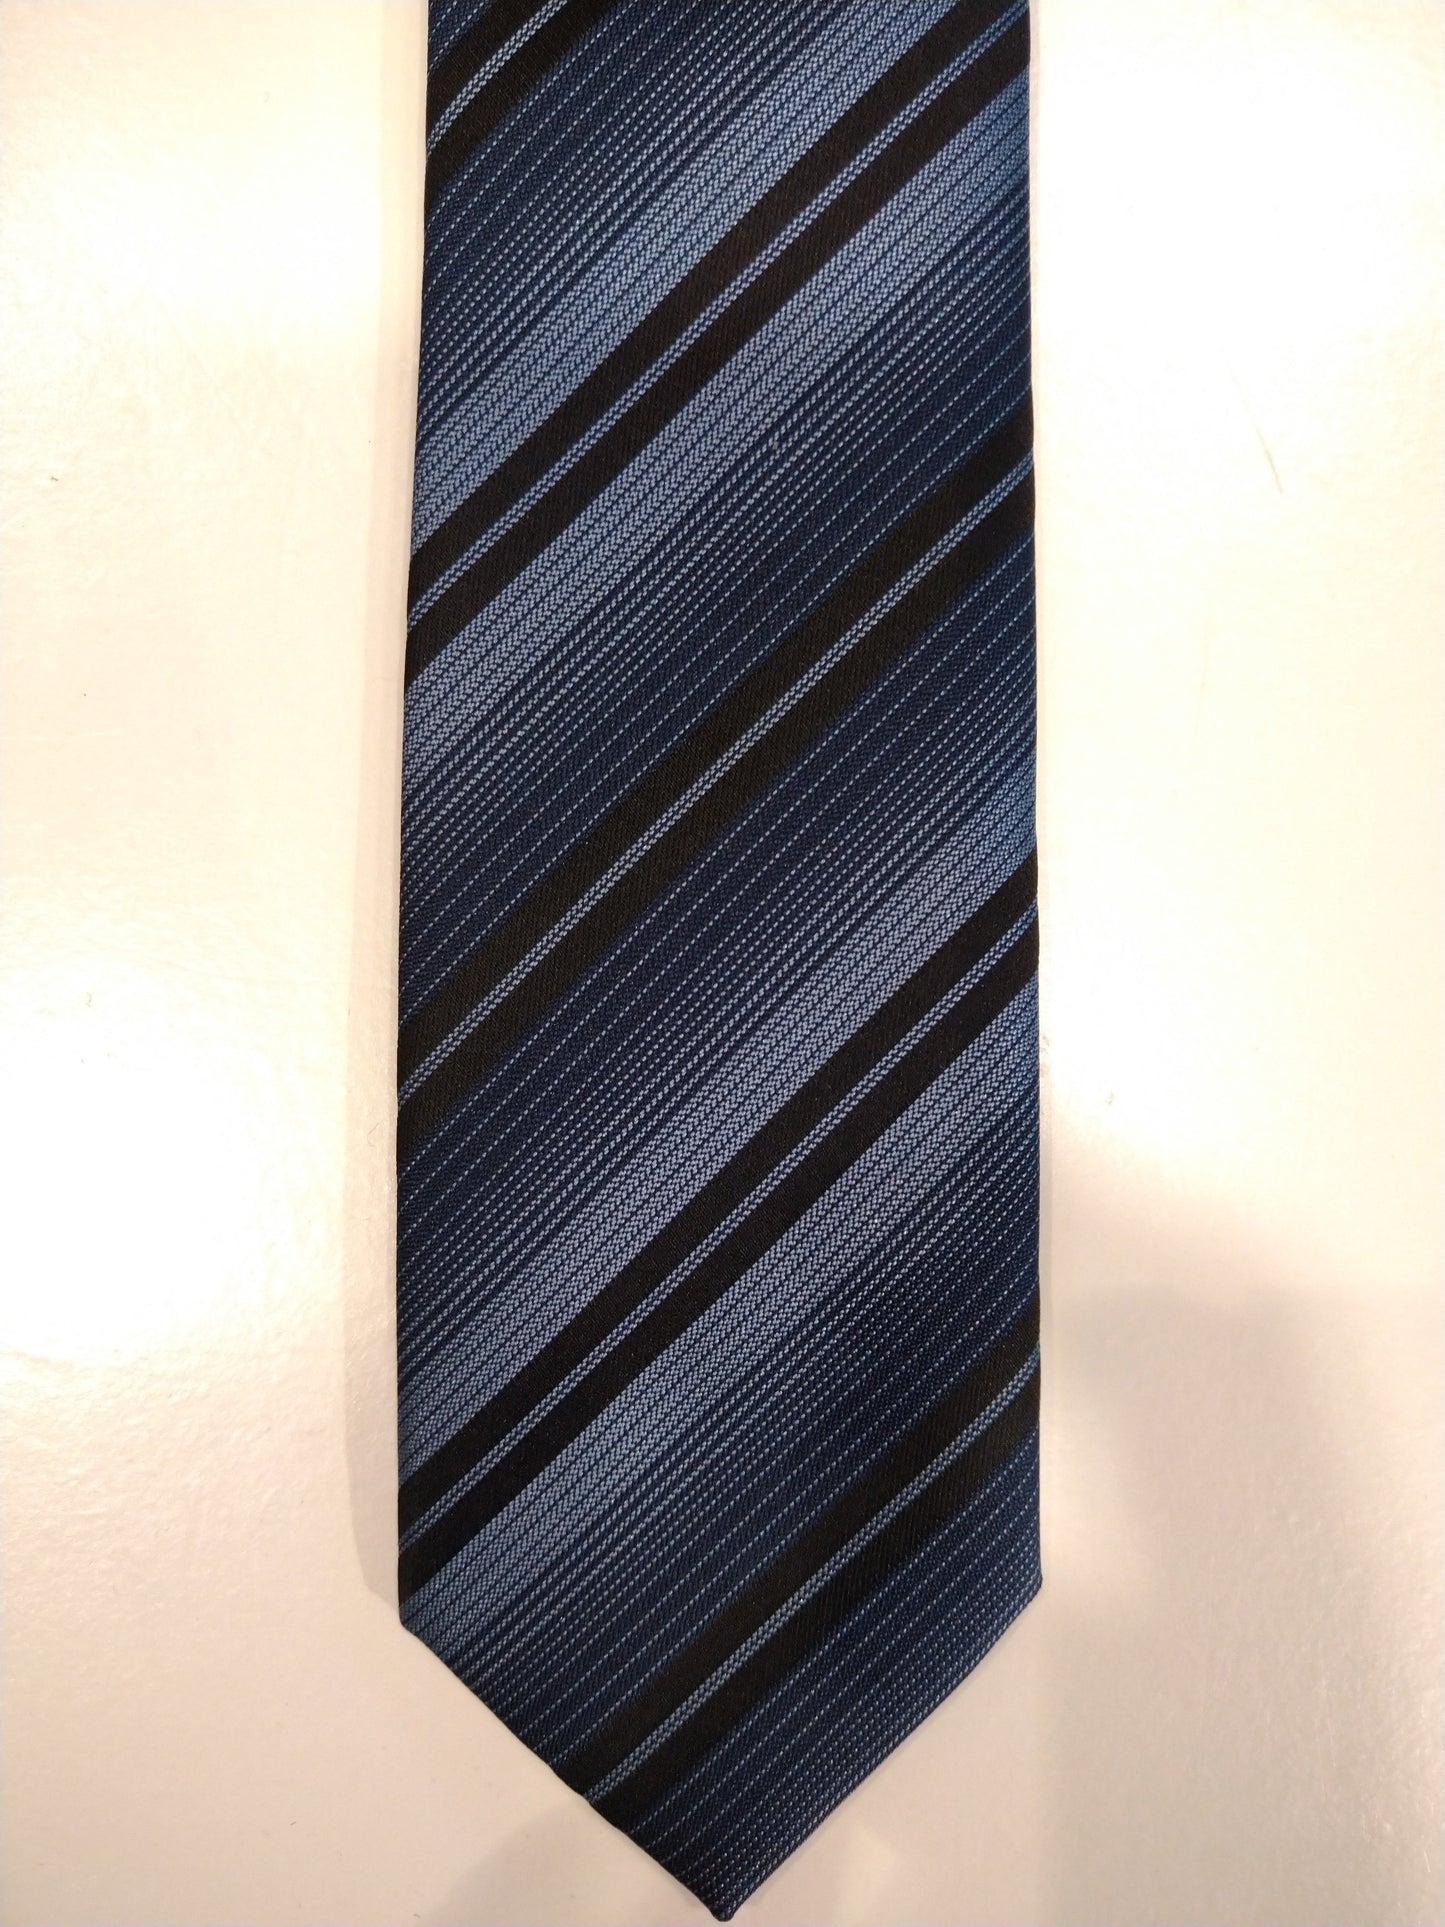 Cedar Wood State narrow polyester tie. Blue black striped.